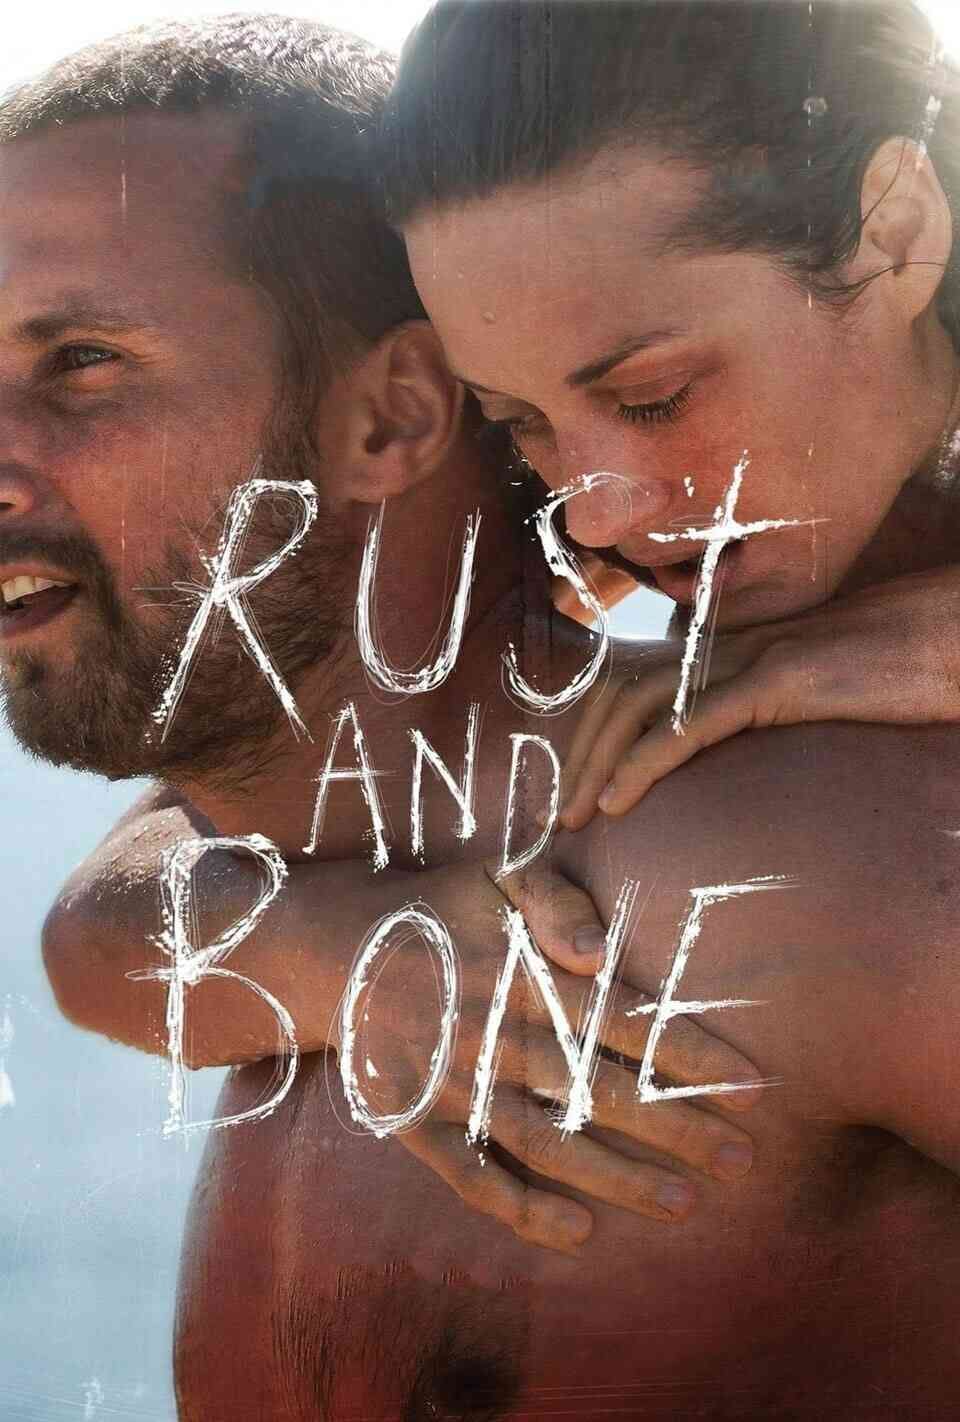 Read Rust and Bone screenplay (poster)